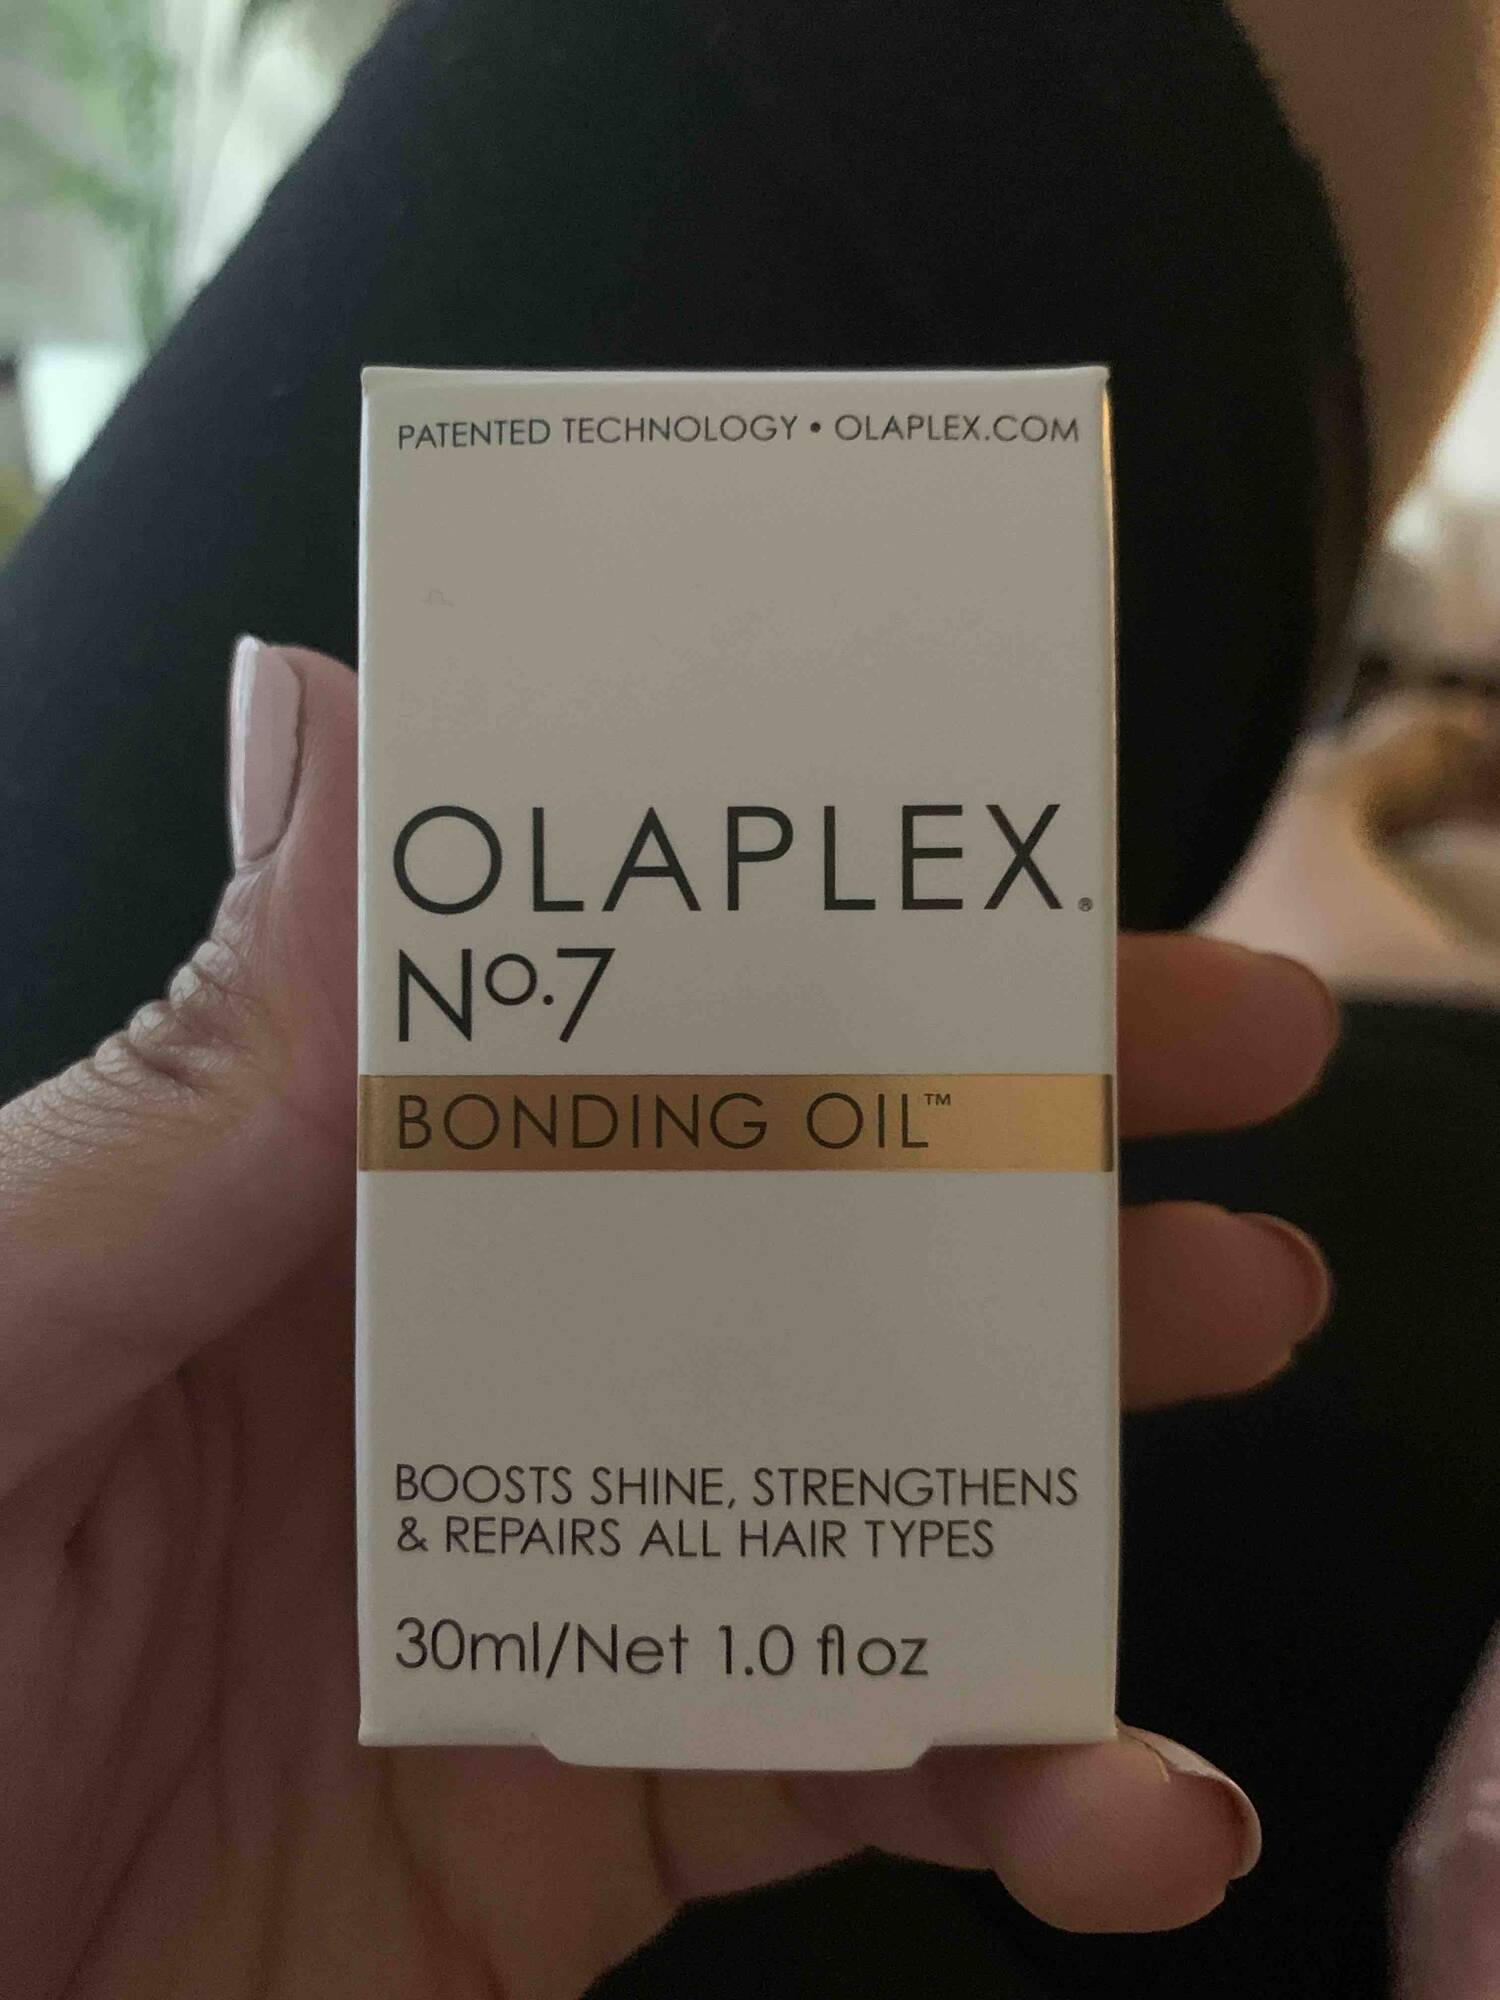 OLAPLEX - Bonding oil - Boosts shine, strengthens & repairs all hair types